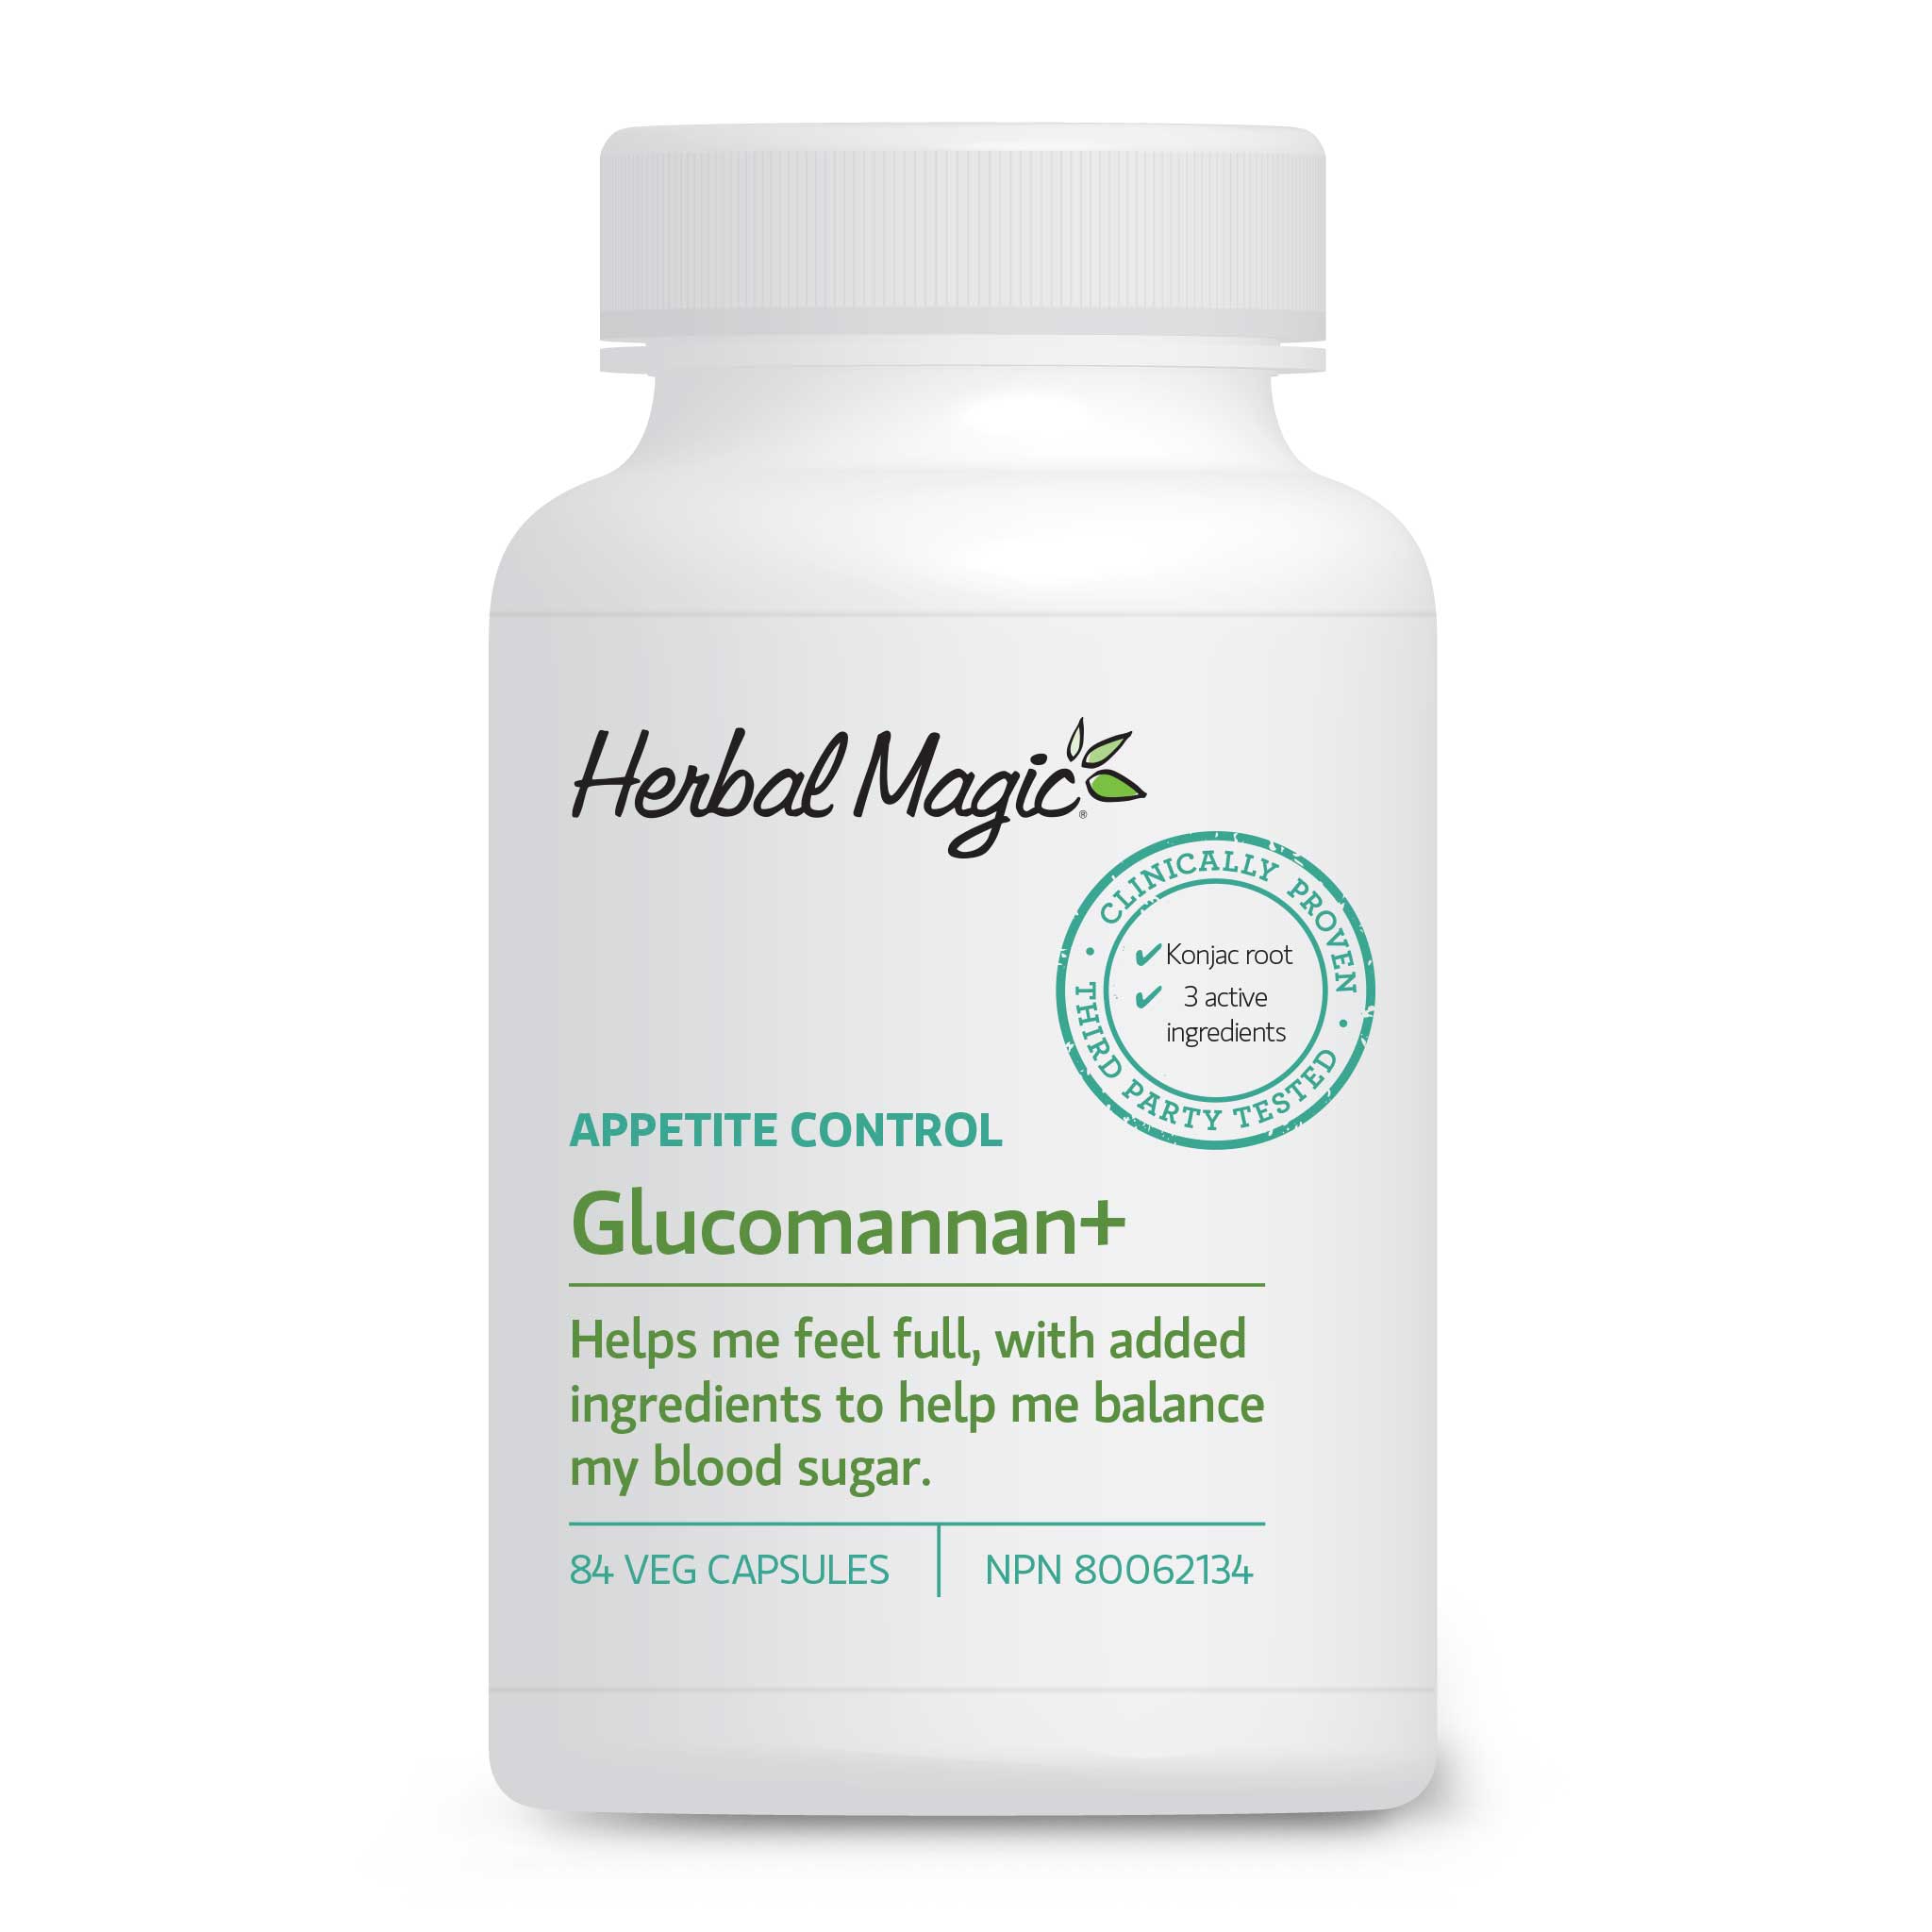 Herbal Magic's Glucomannan+ helps you feel fuller longer.